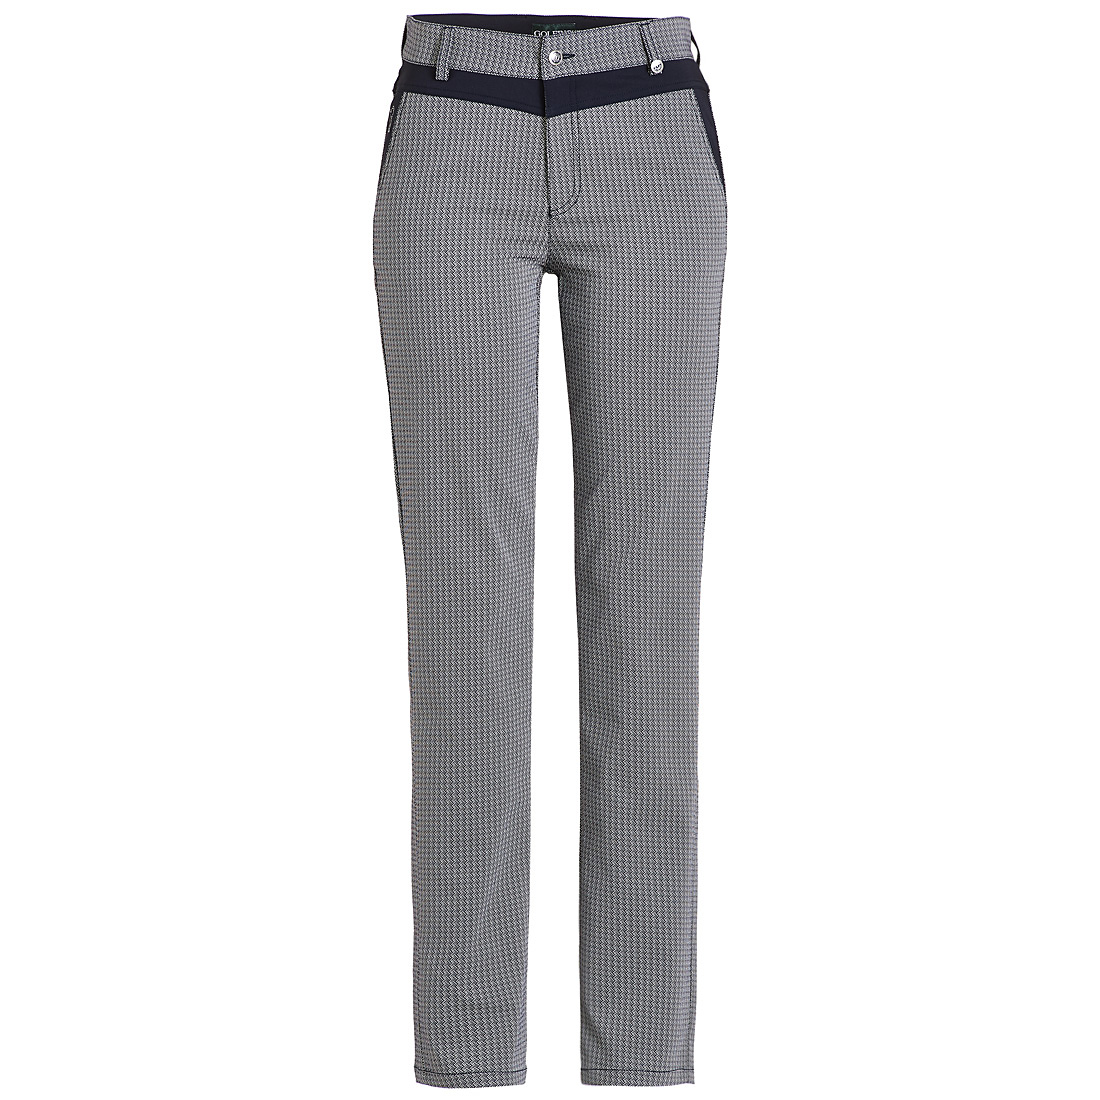 GOLFINO Ladies Argyle Stretch Trousers | Online Golf